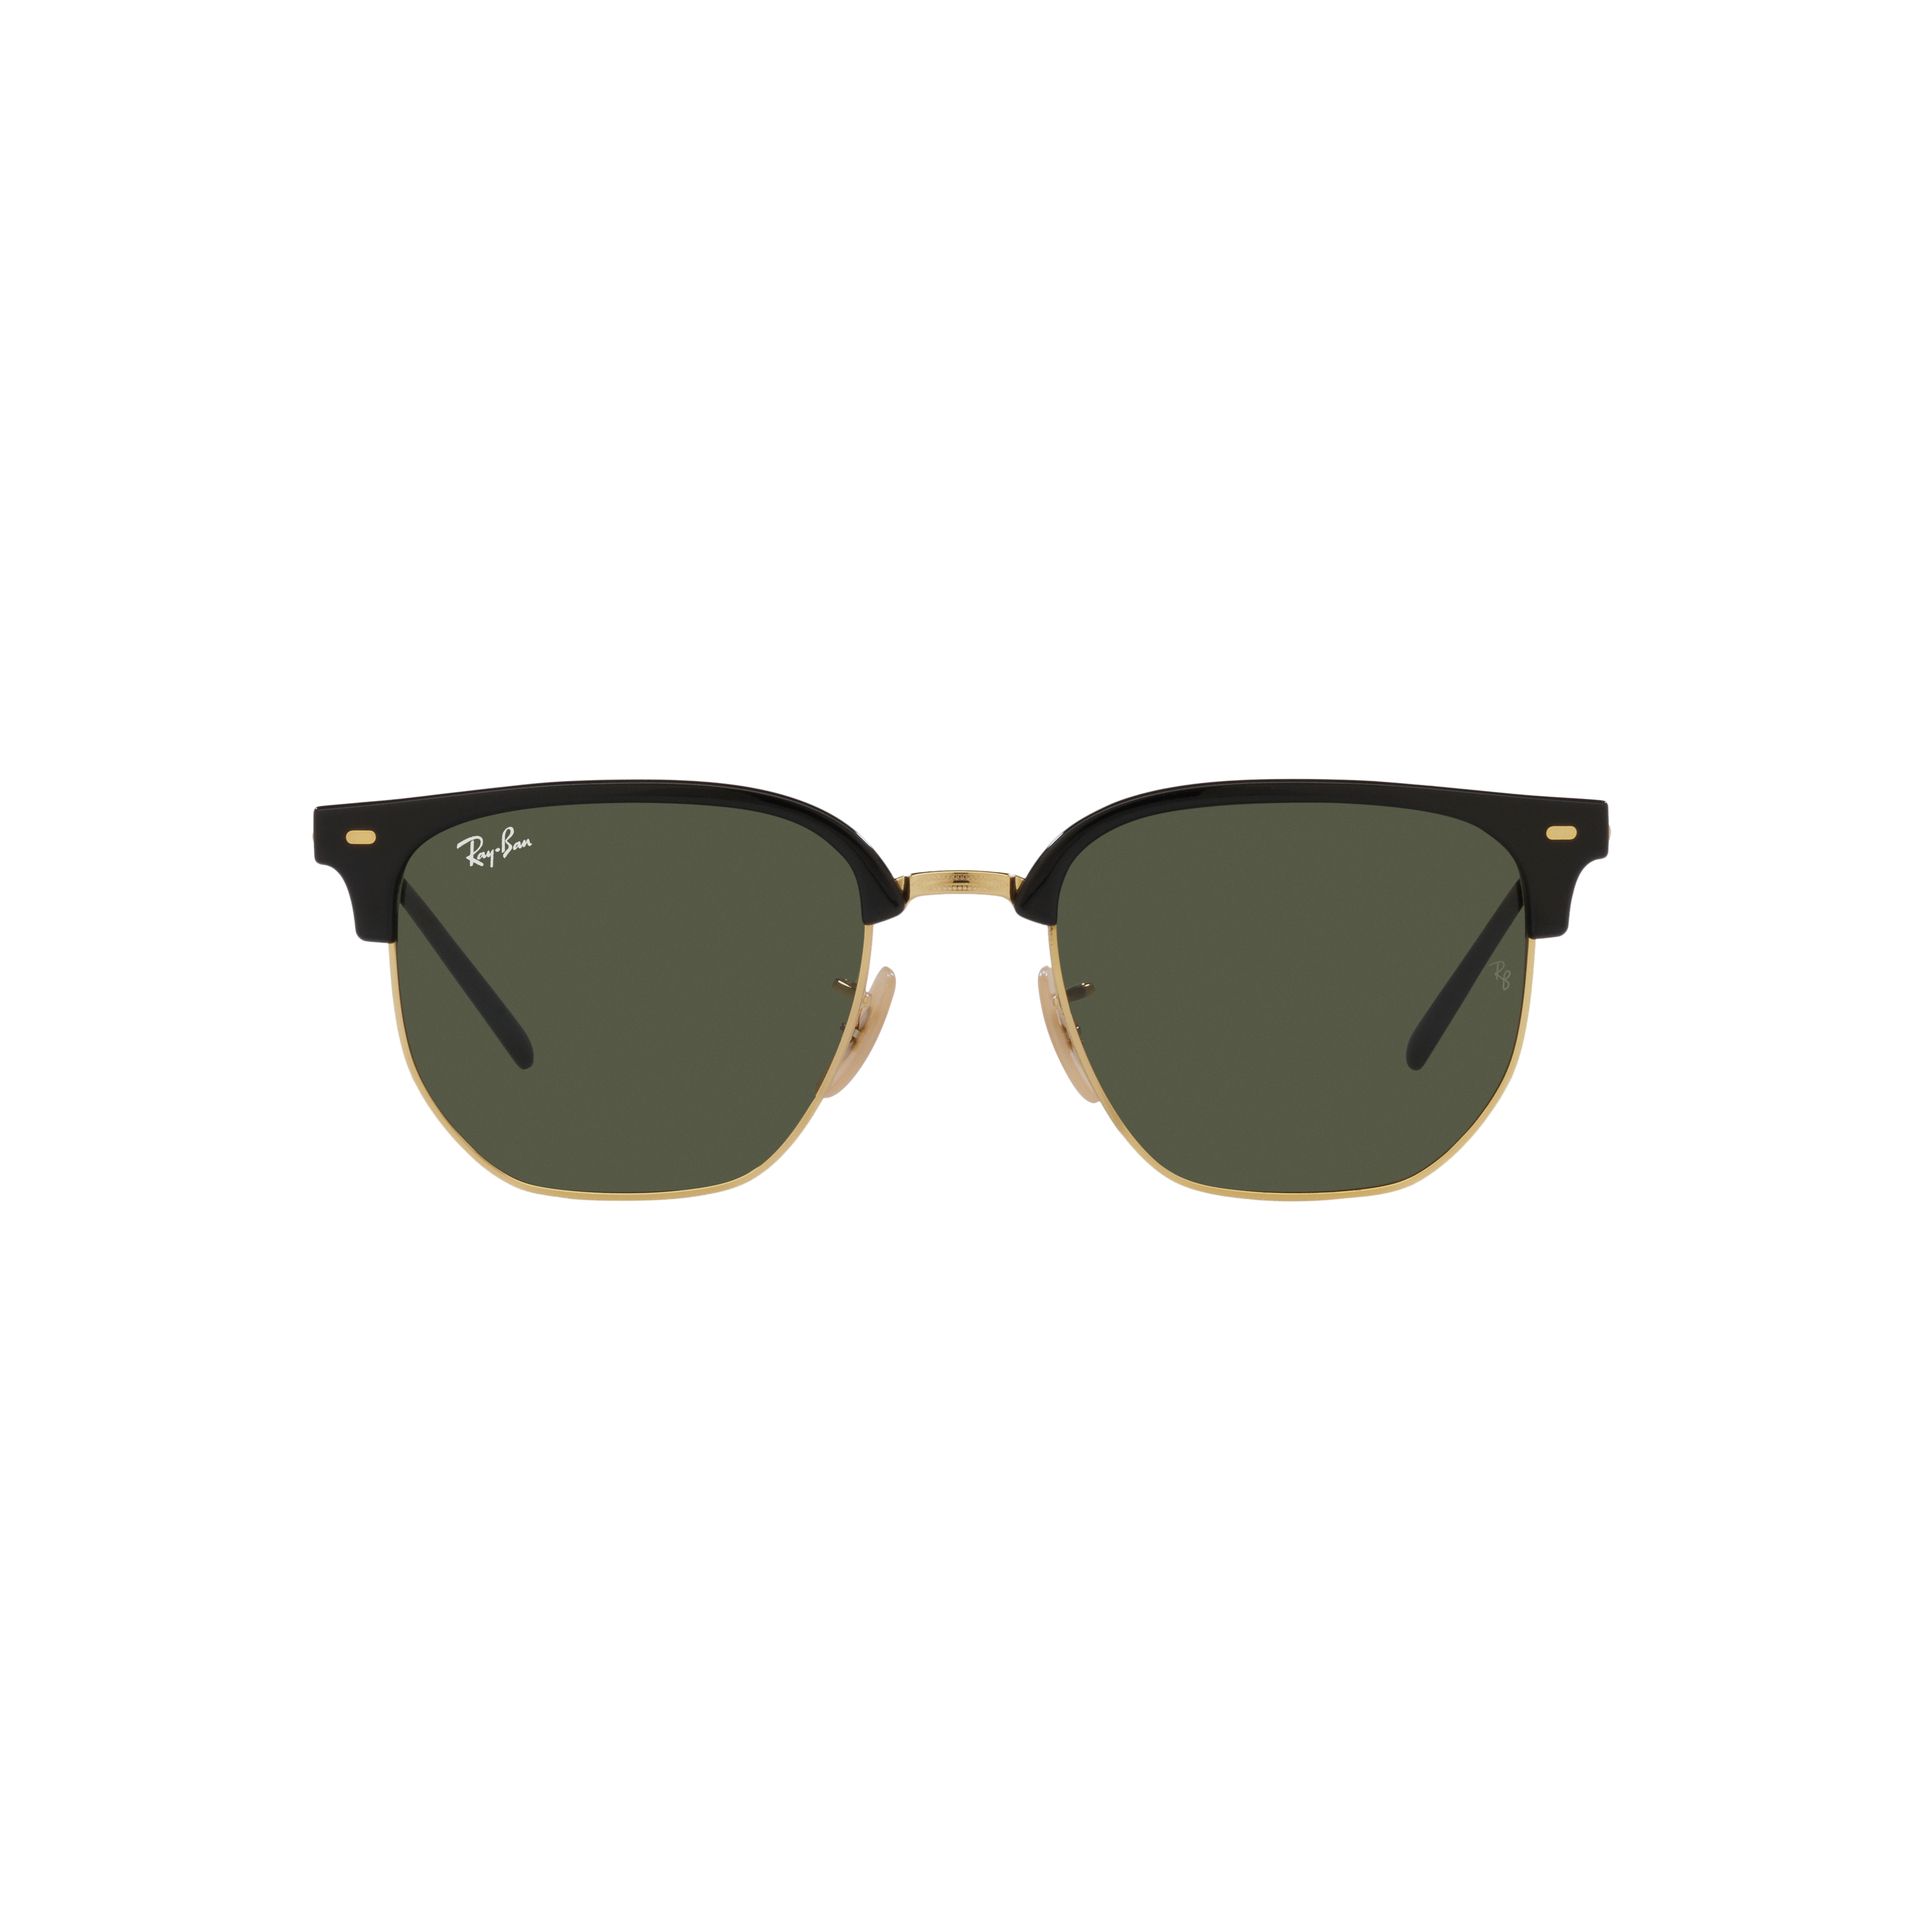 0RB4416 Irregular Sunglasses 601 31 - size 51